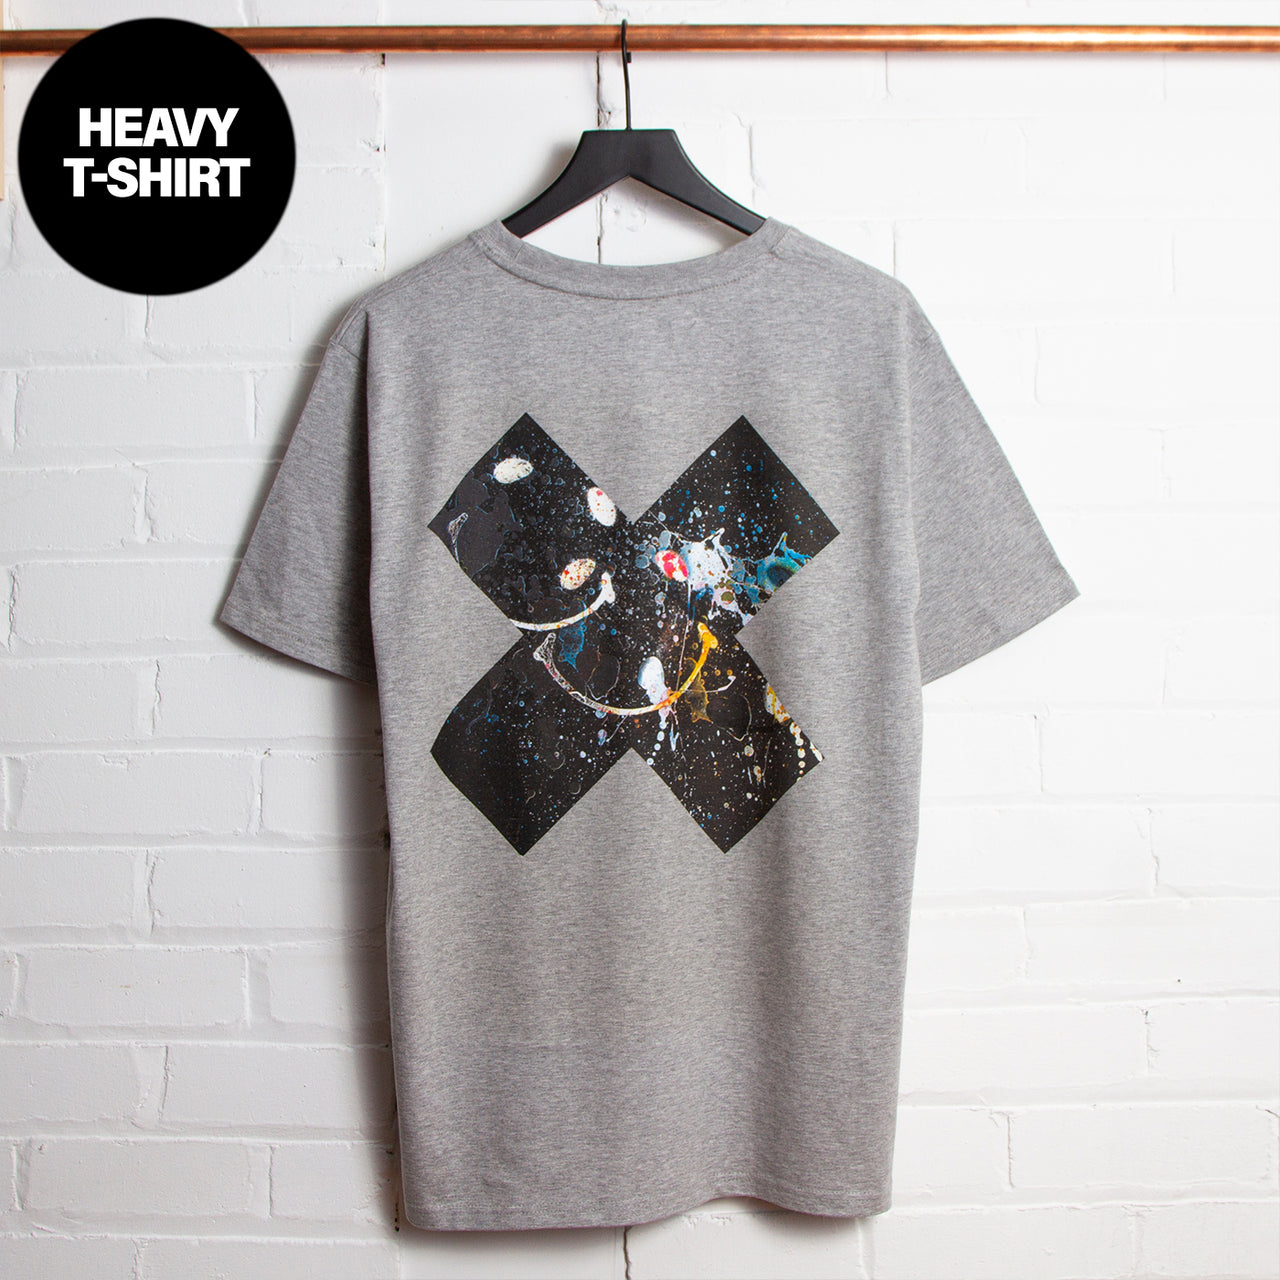 Smiley 1 X Imprint - Heavy Tshirt - Grey